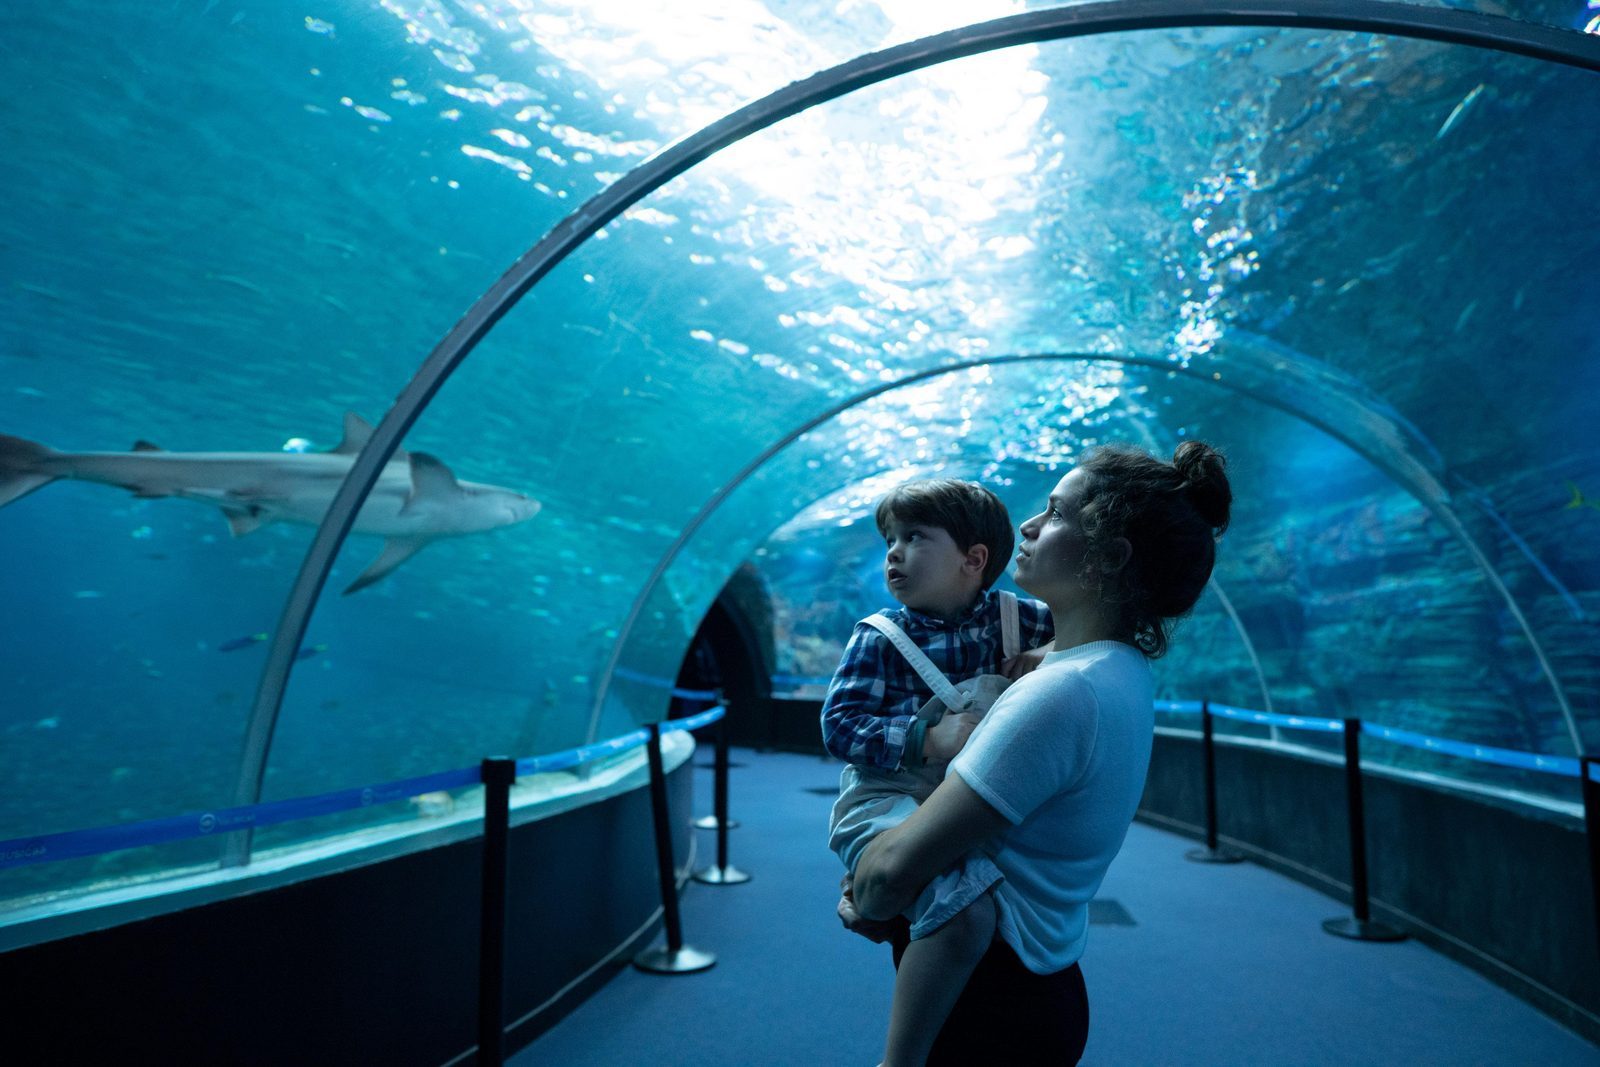 Nausicaá: the largest aquarium in Europe in Boulogne-sur-Mer